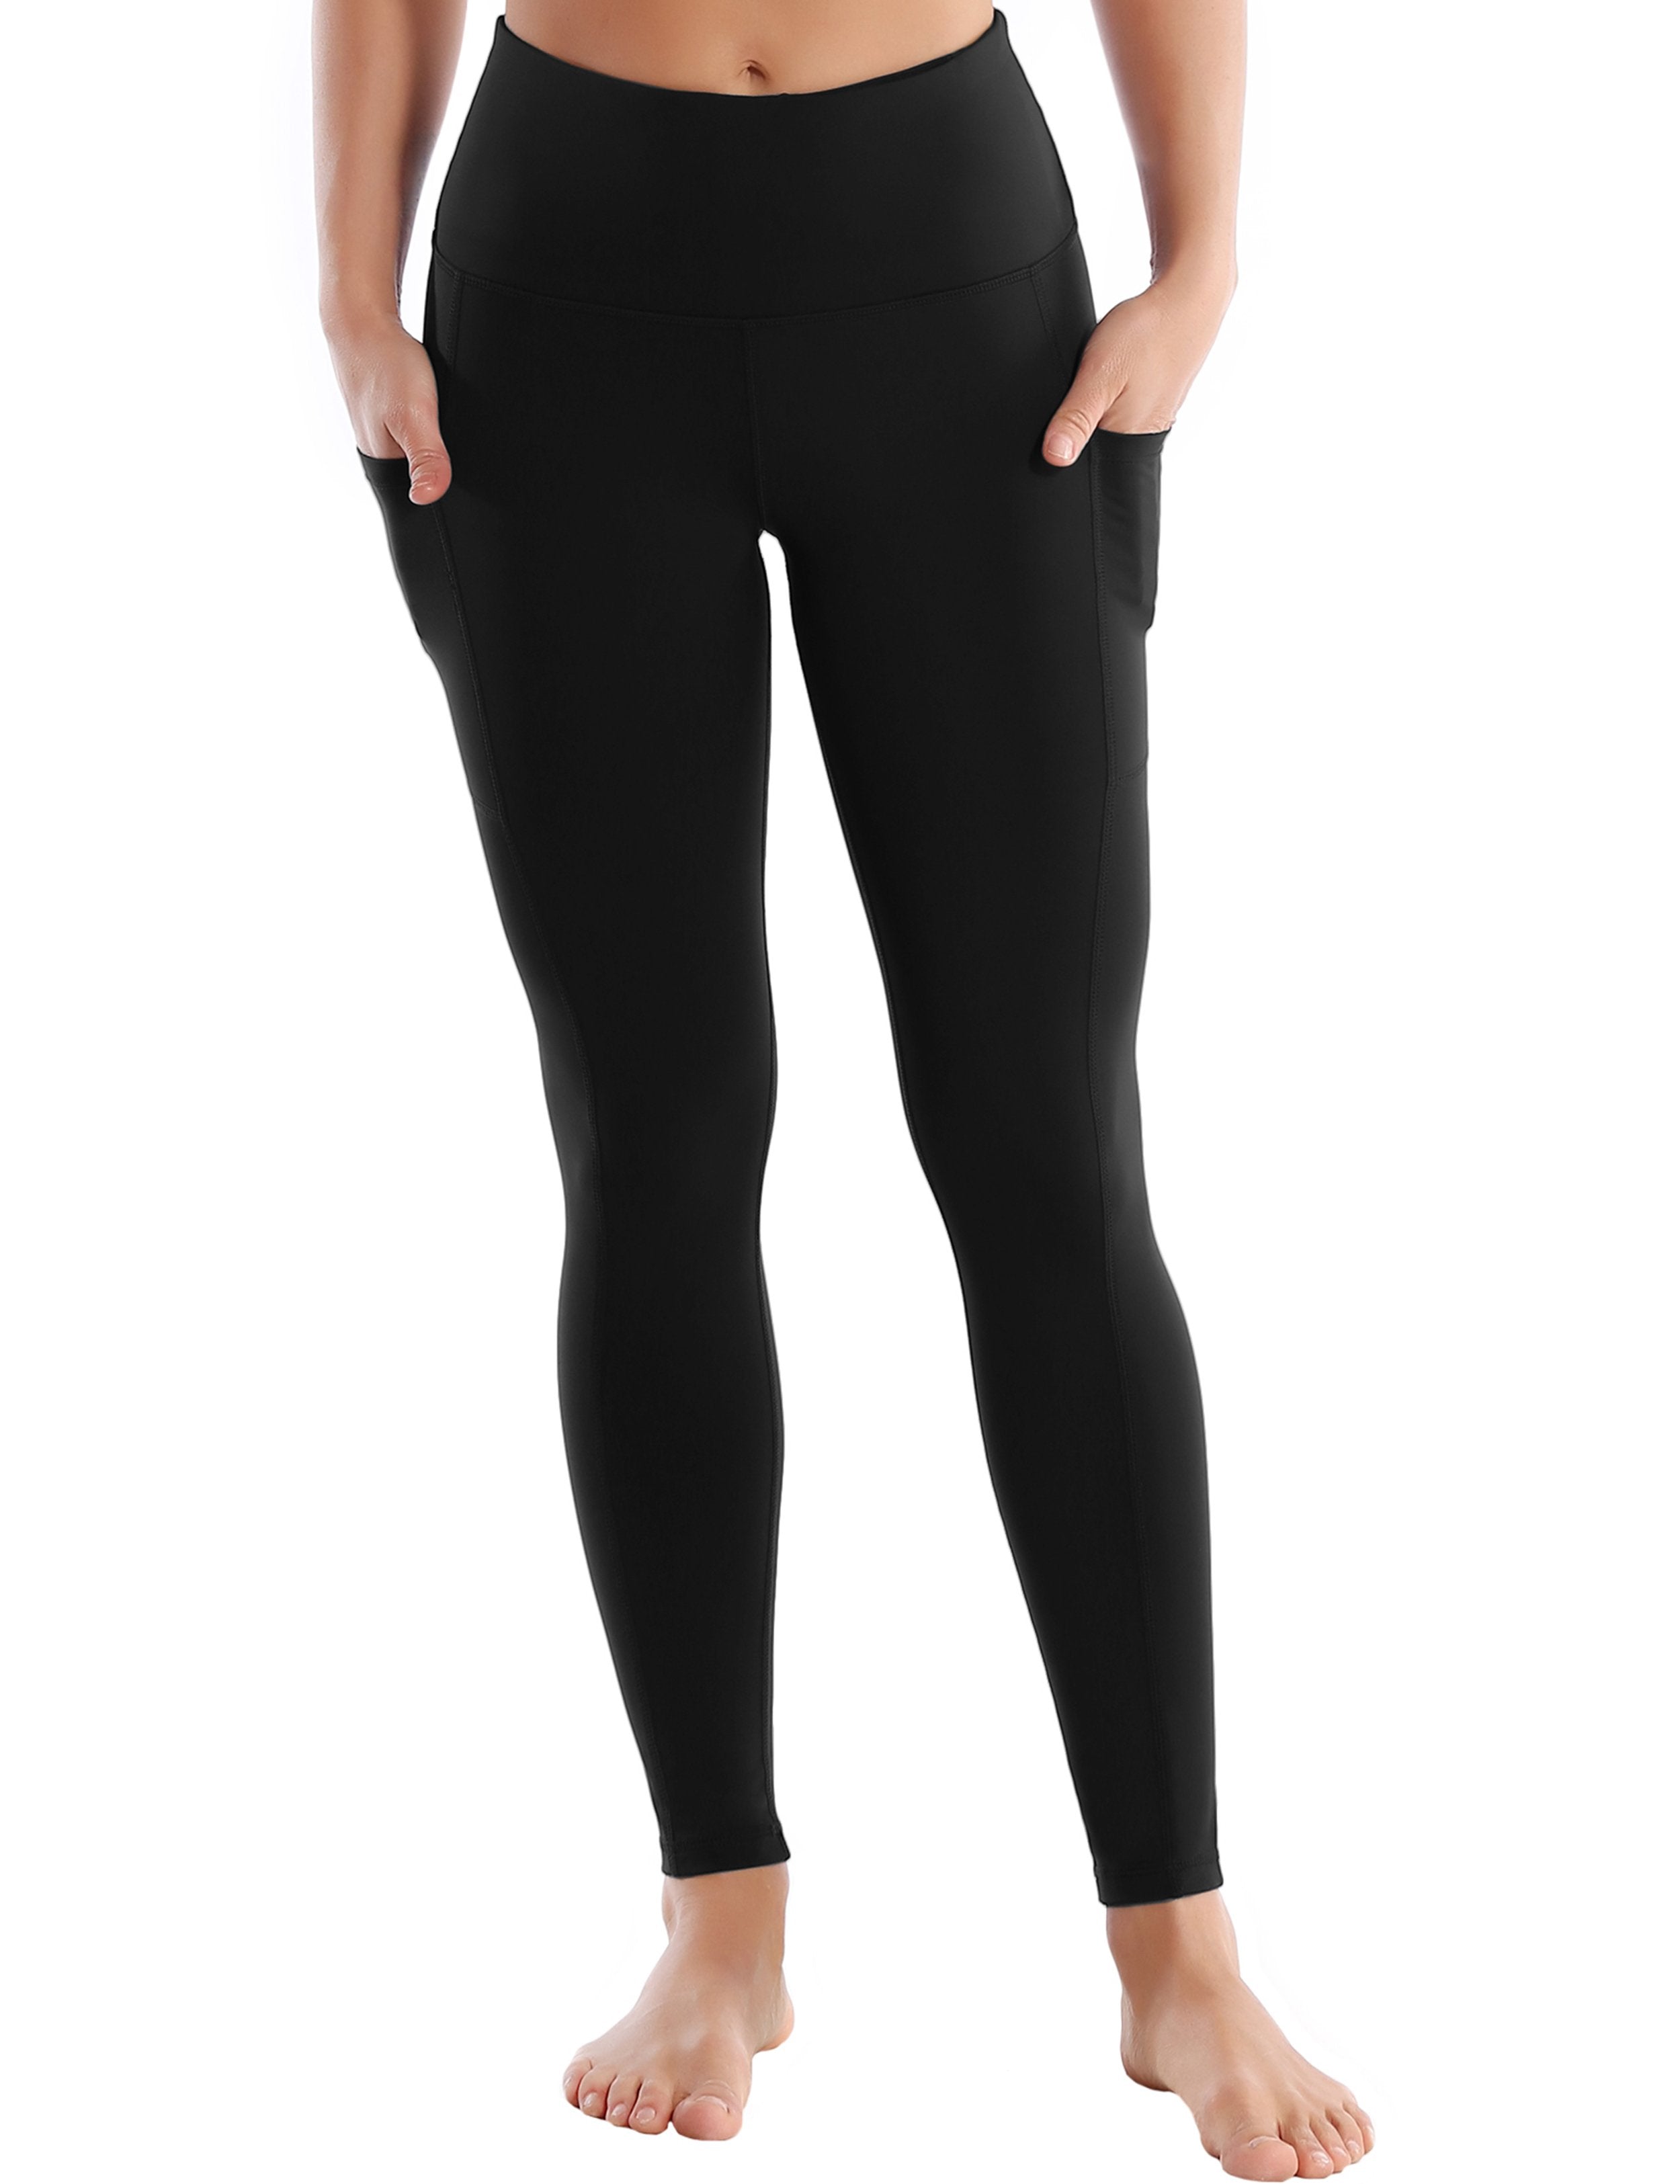 Women's Black Yoga Pants - Decorative Semi-sheer Inserts - Black